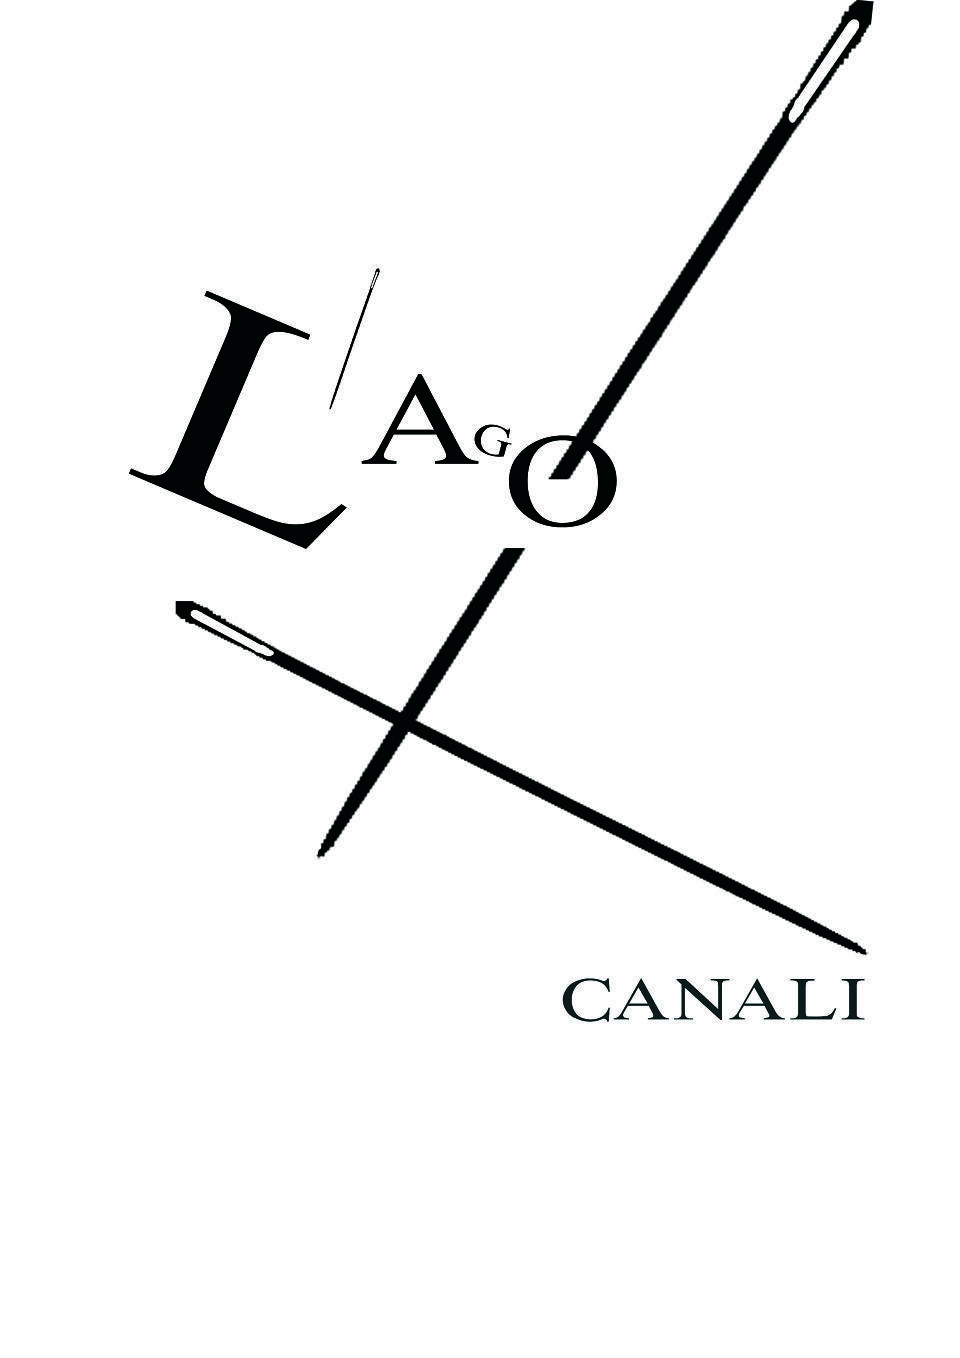 Canali Logo - CANALI MENSWEAR (CONCEPT LOGO DESIGN) by Adriana Manzella for CANALI ...